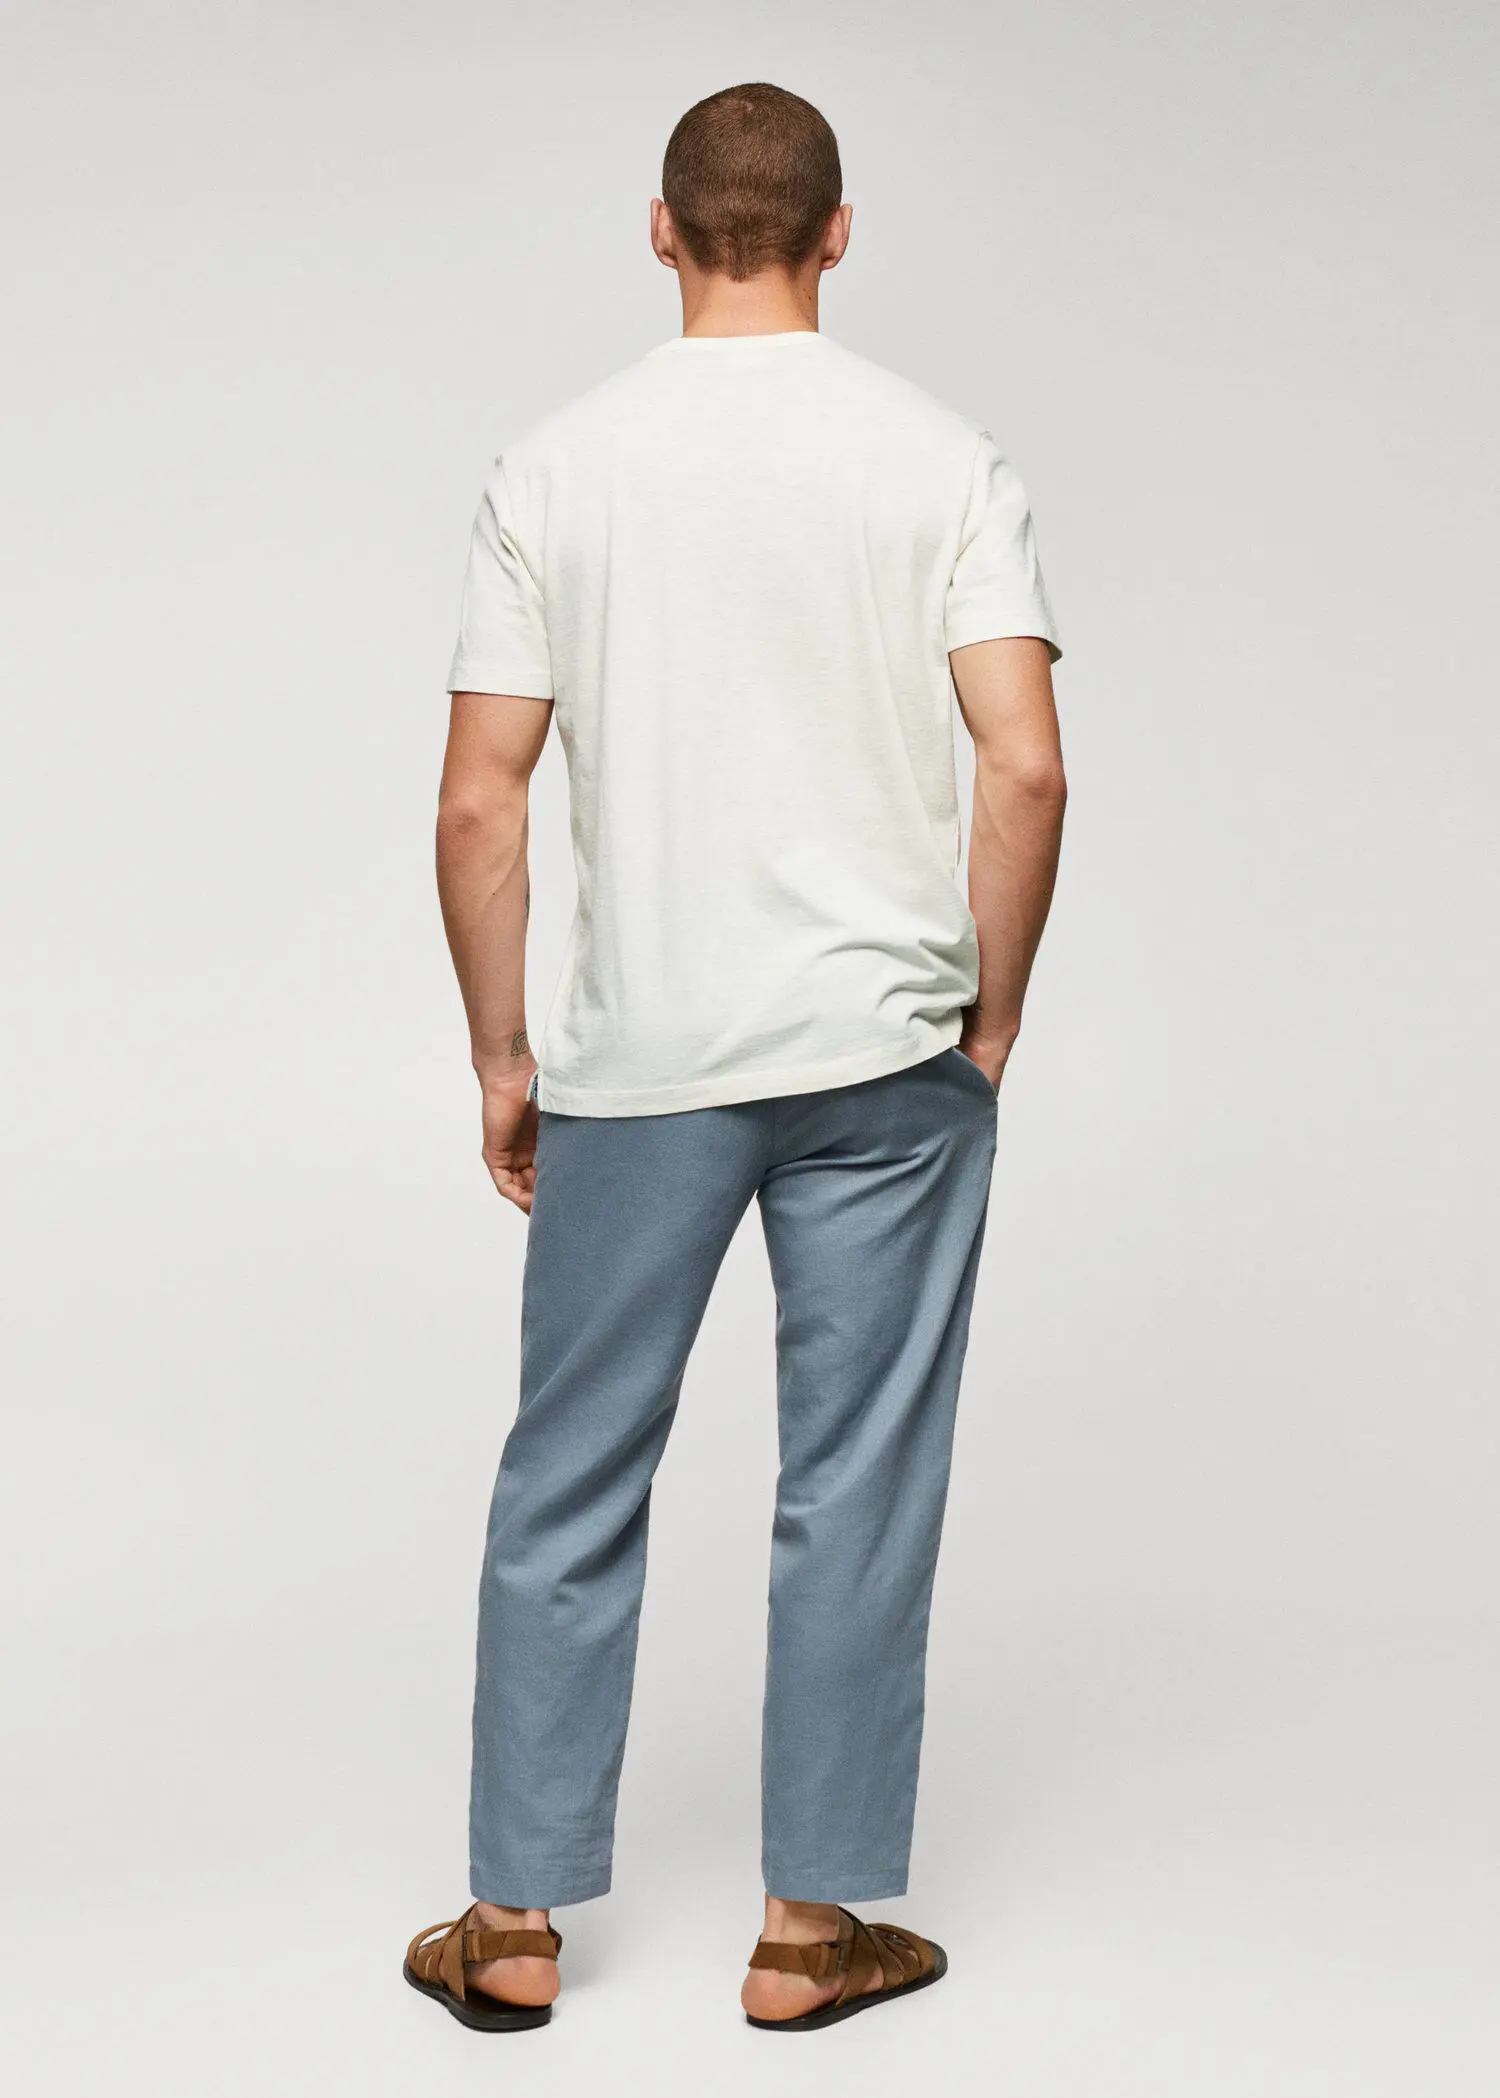 Mango T-shirt poche 100 % coton. 3